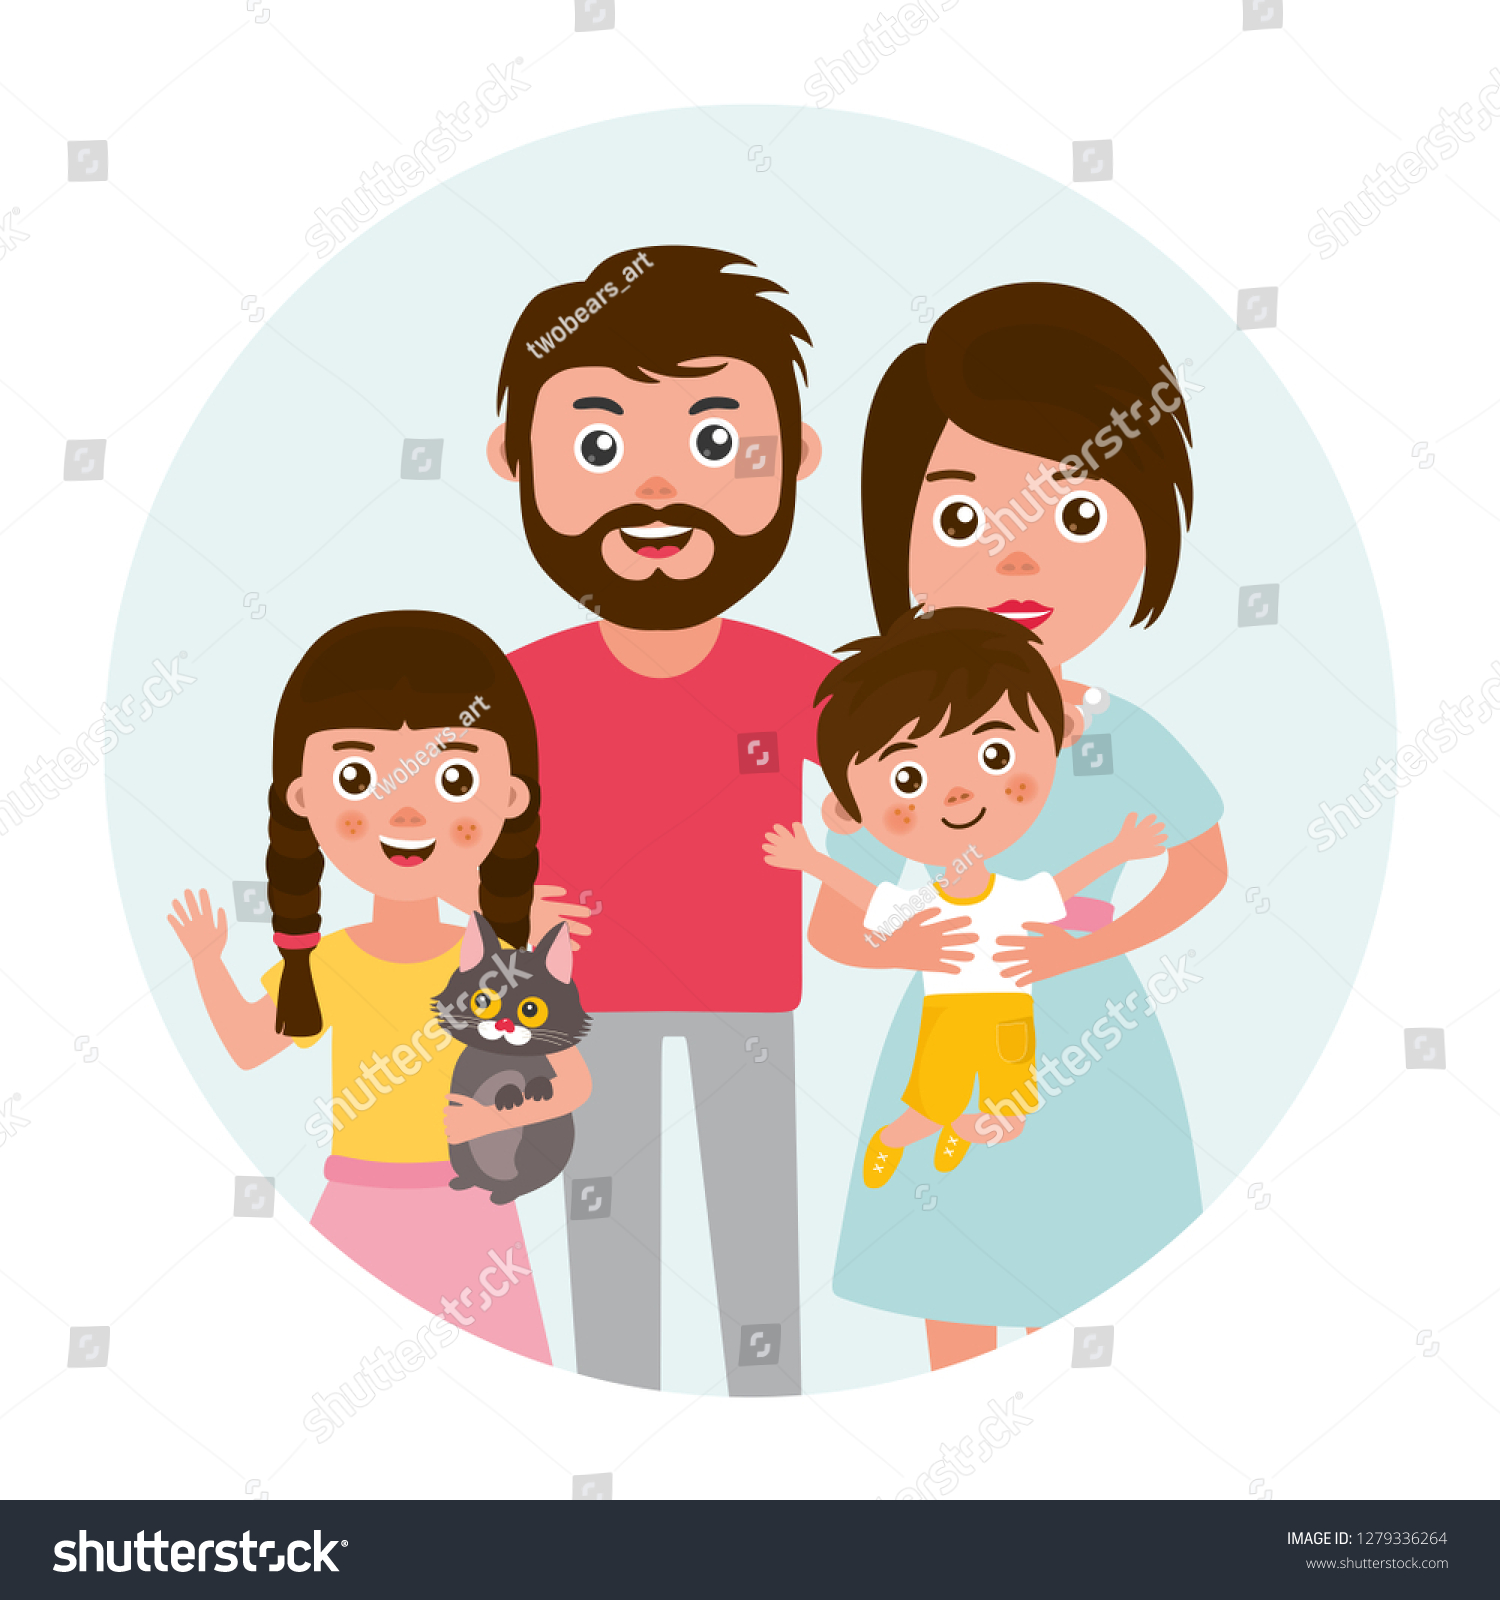 Big Happy Family Portrait Set Characters Stock Illustration 1279336264